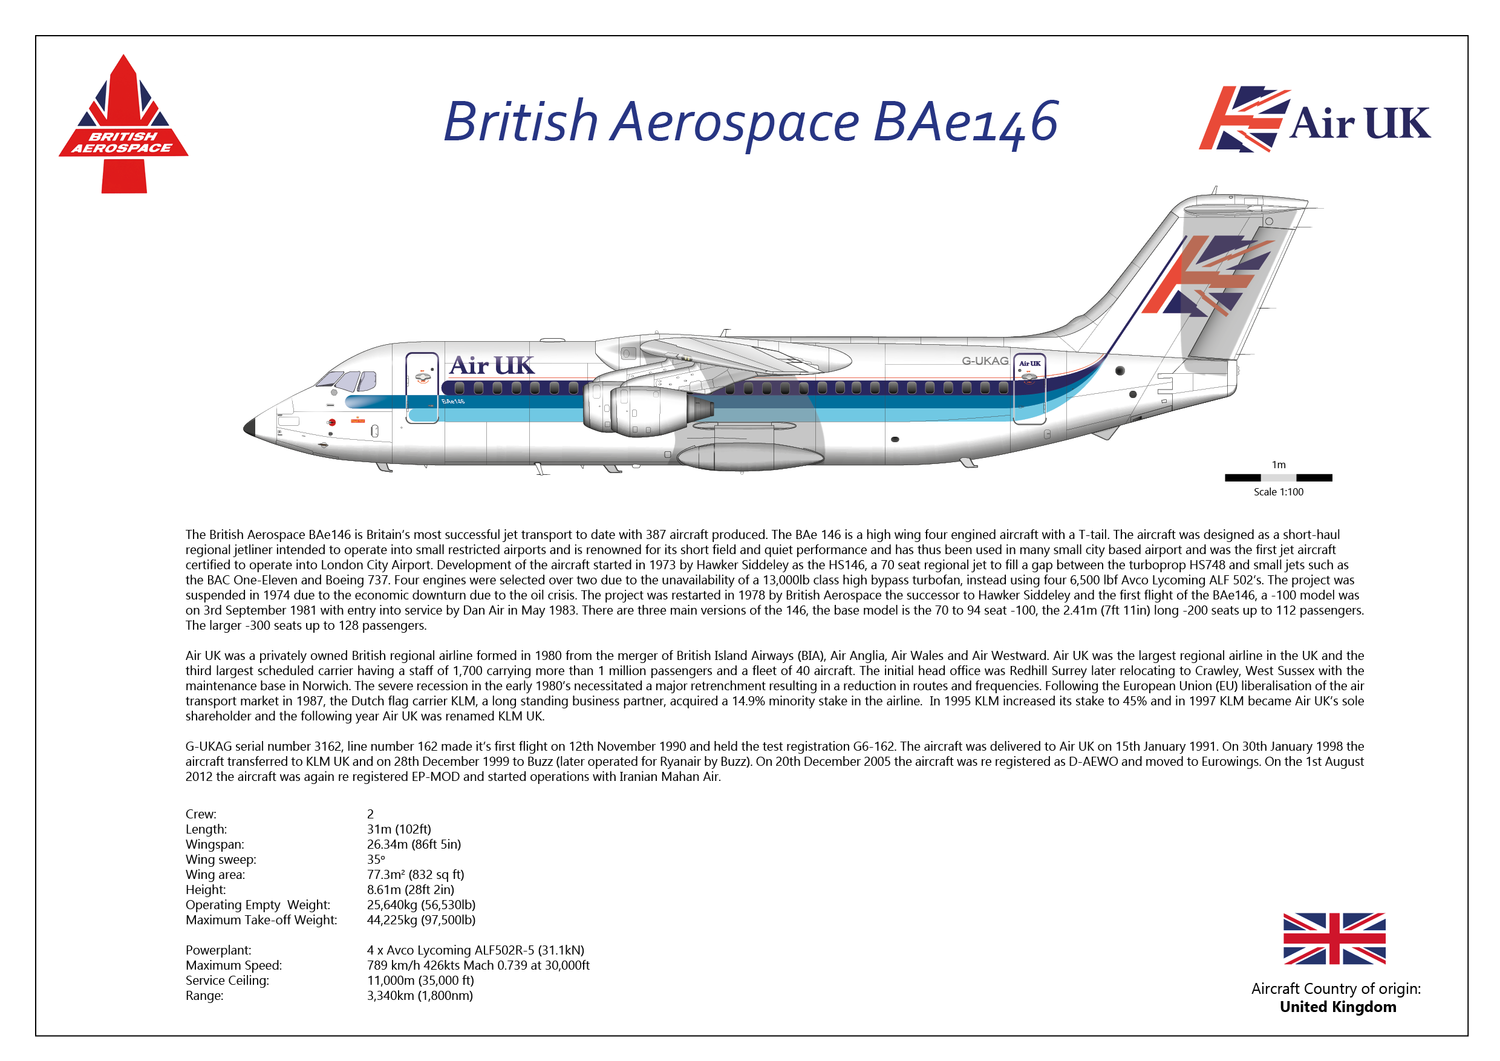 BAe146-300 of Air UK - Layout B